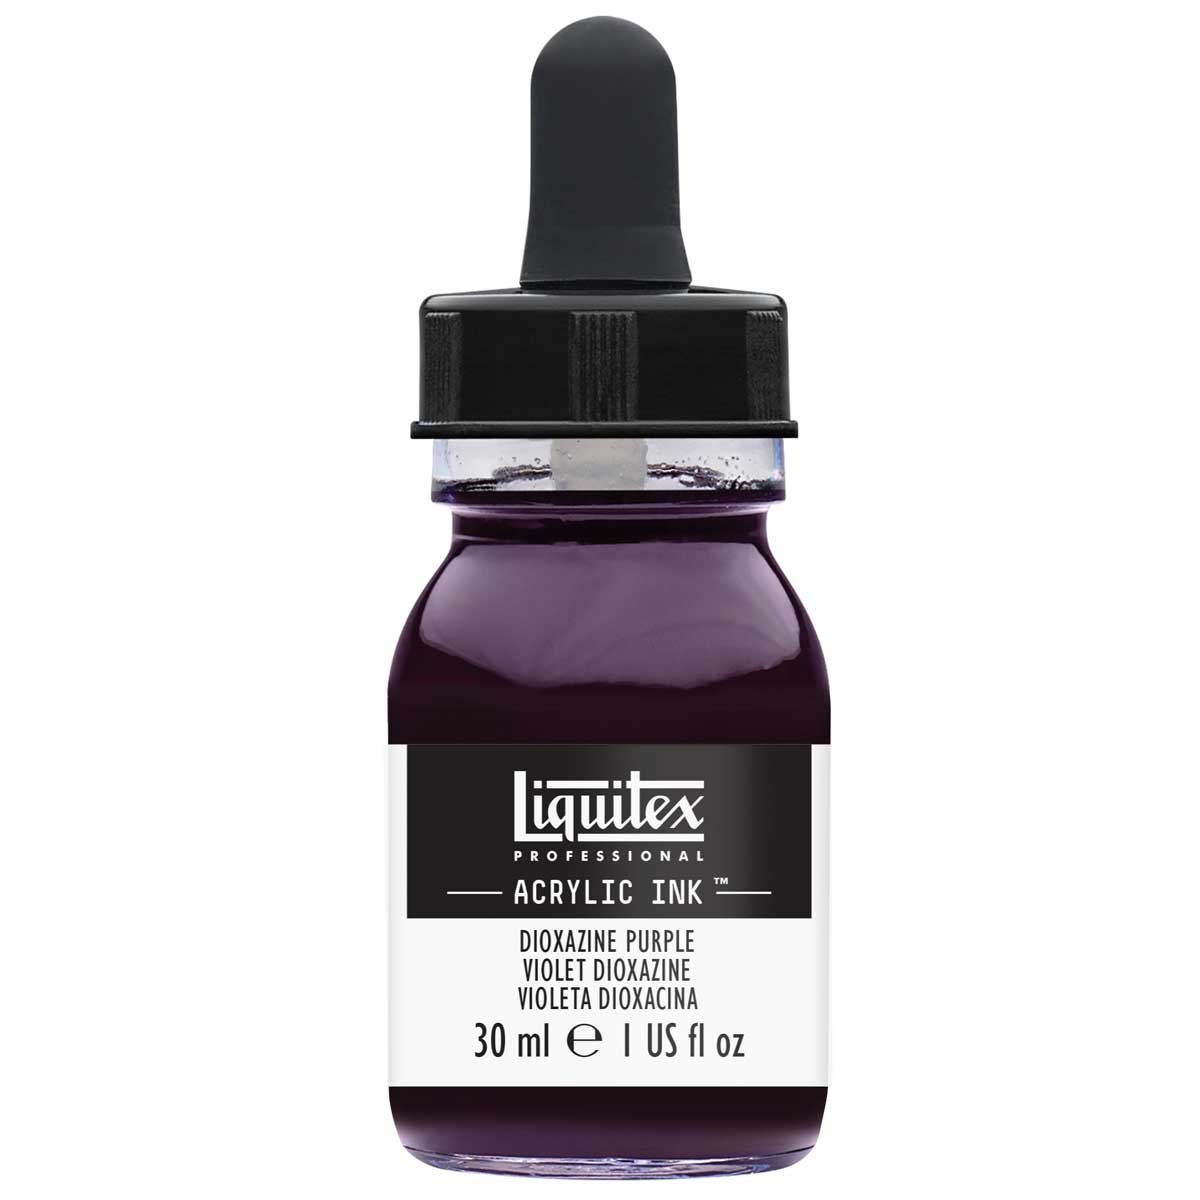 Liquitex Professional Acrylic Ink - Dioxazine Purple 30ml/1oz